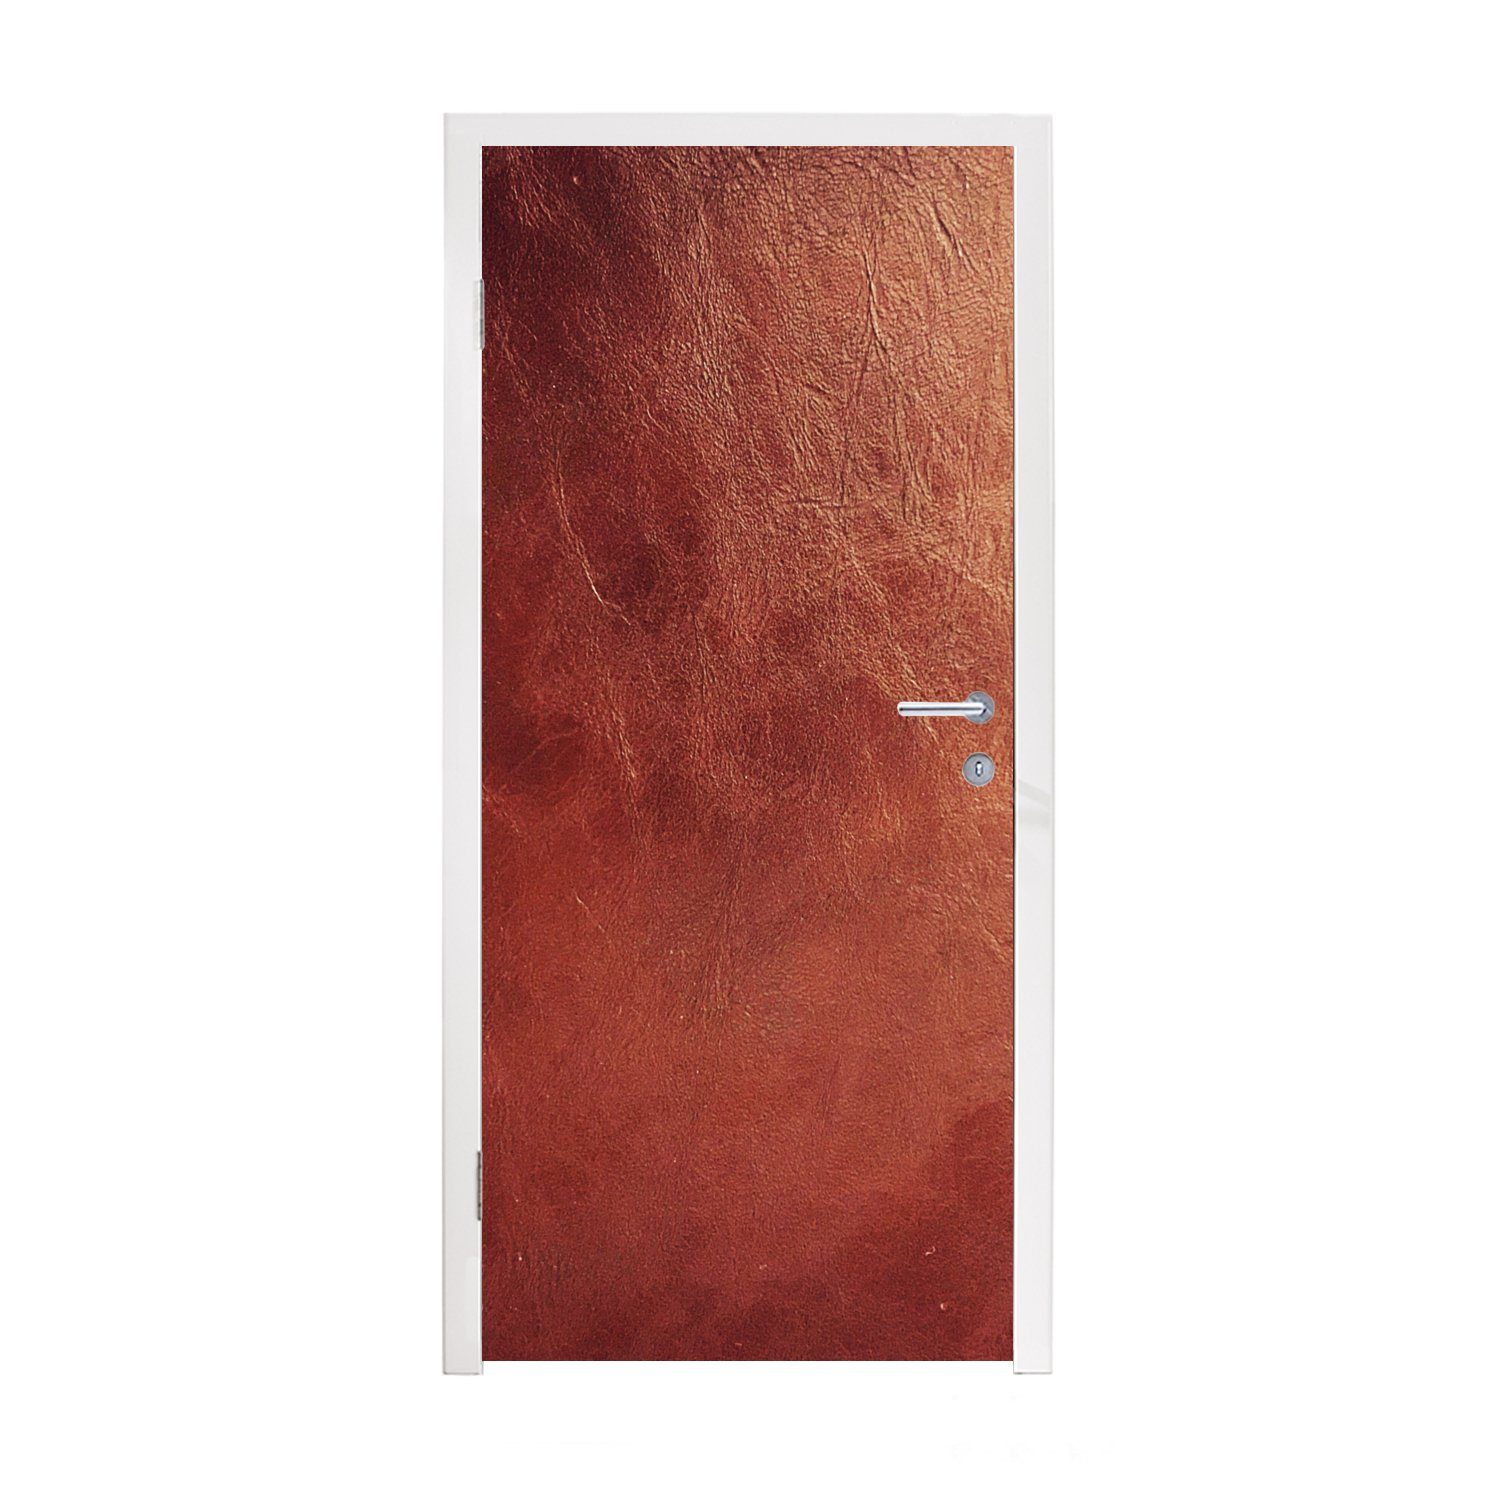 MuchoWow Türtapete Leder - Lederoptik - Braun - Hell, Matt, bedruckt, (1 St), Fototapete für Tür, Türaufkleber, 75x205 cm